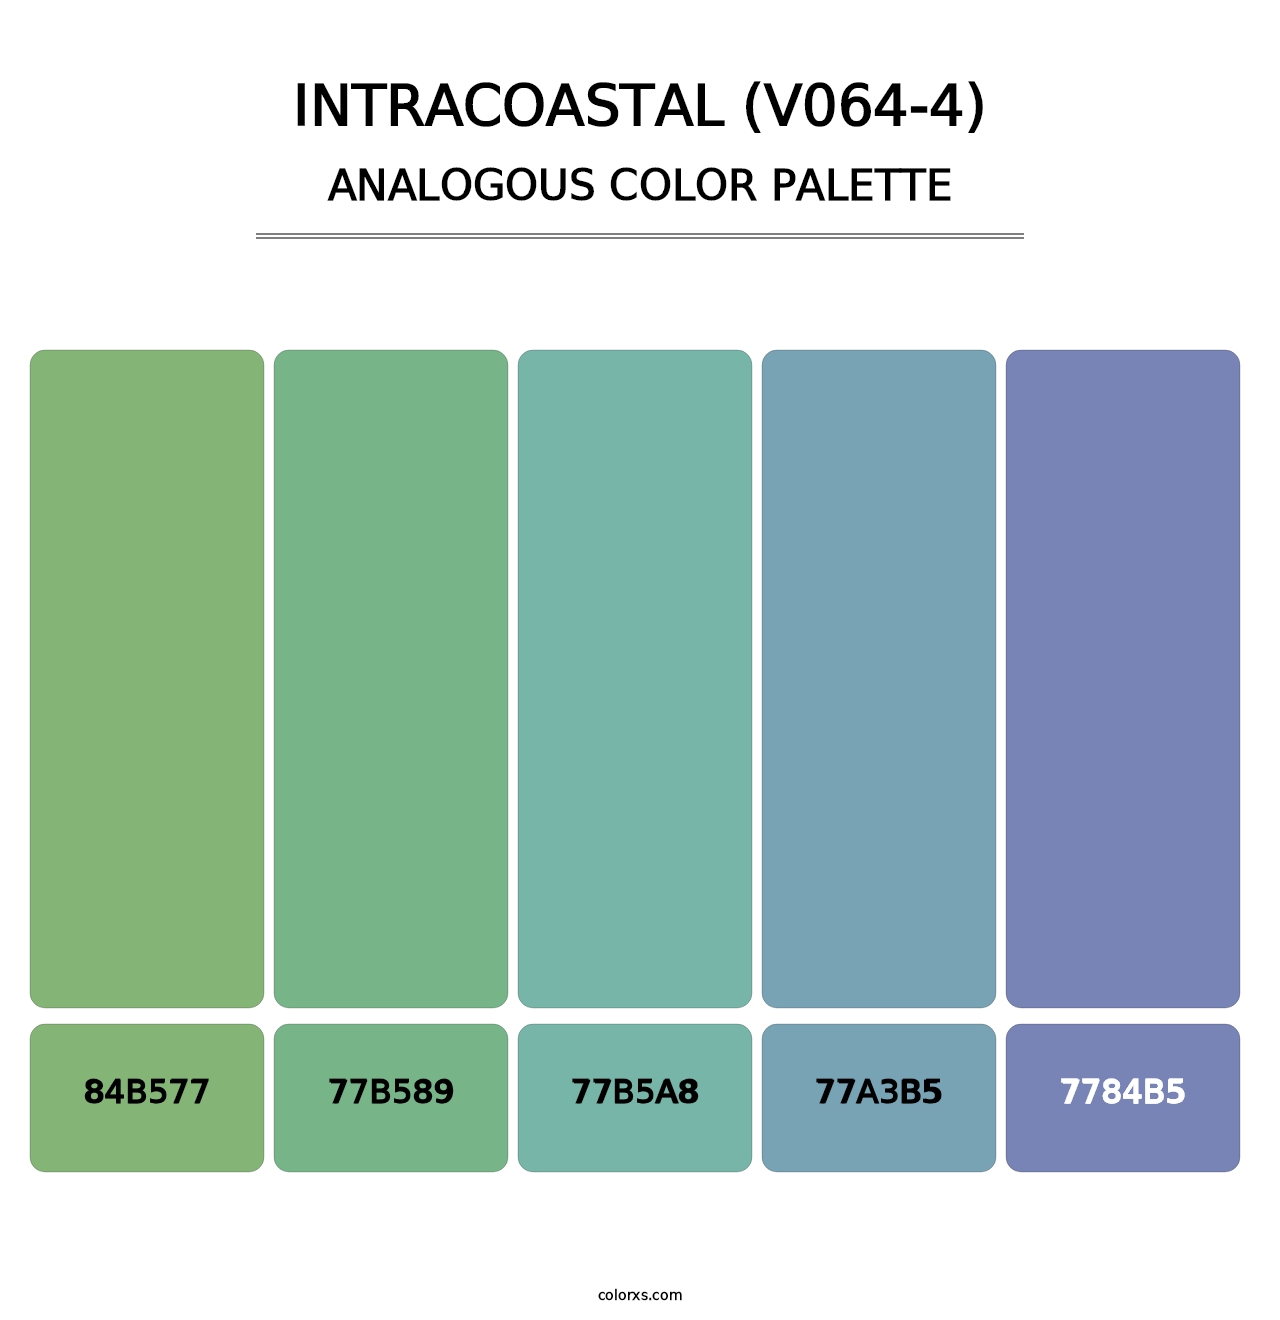 Intracoastal (V064-4) - Analogous Color Palette